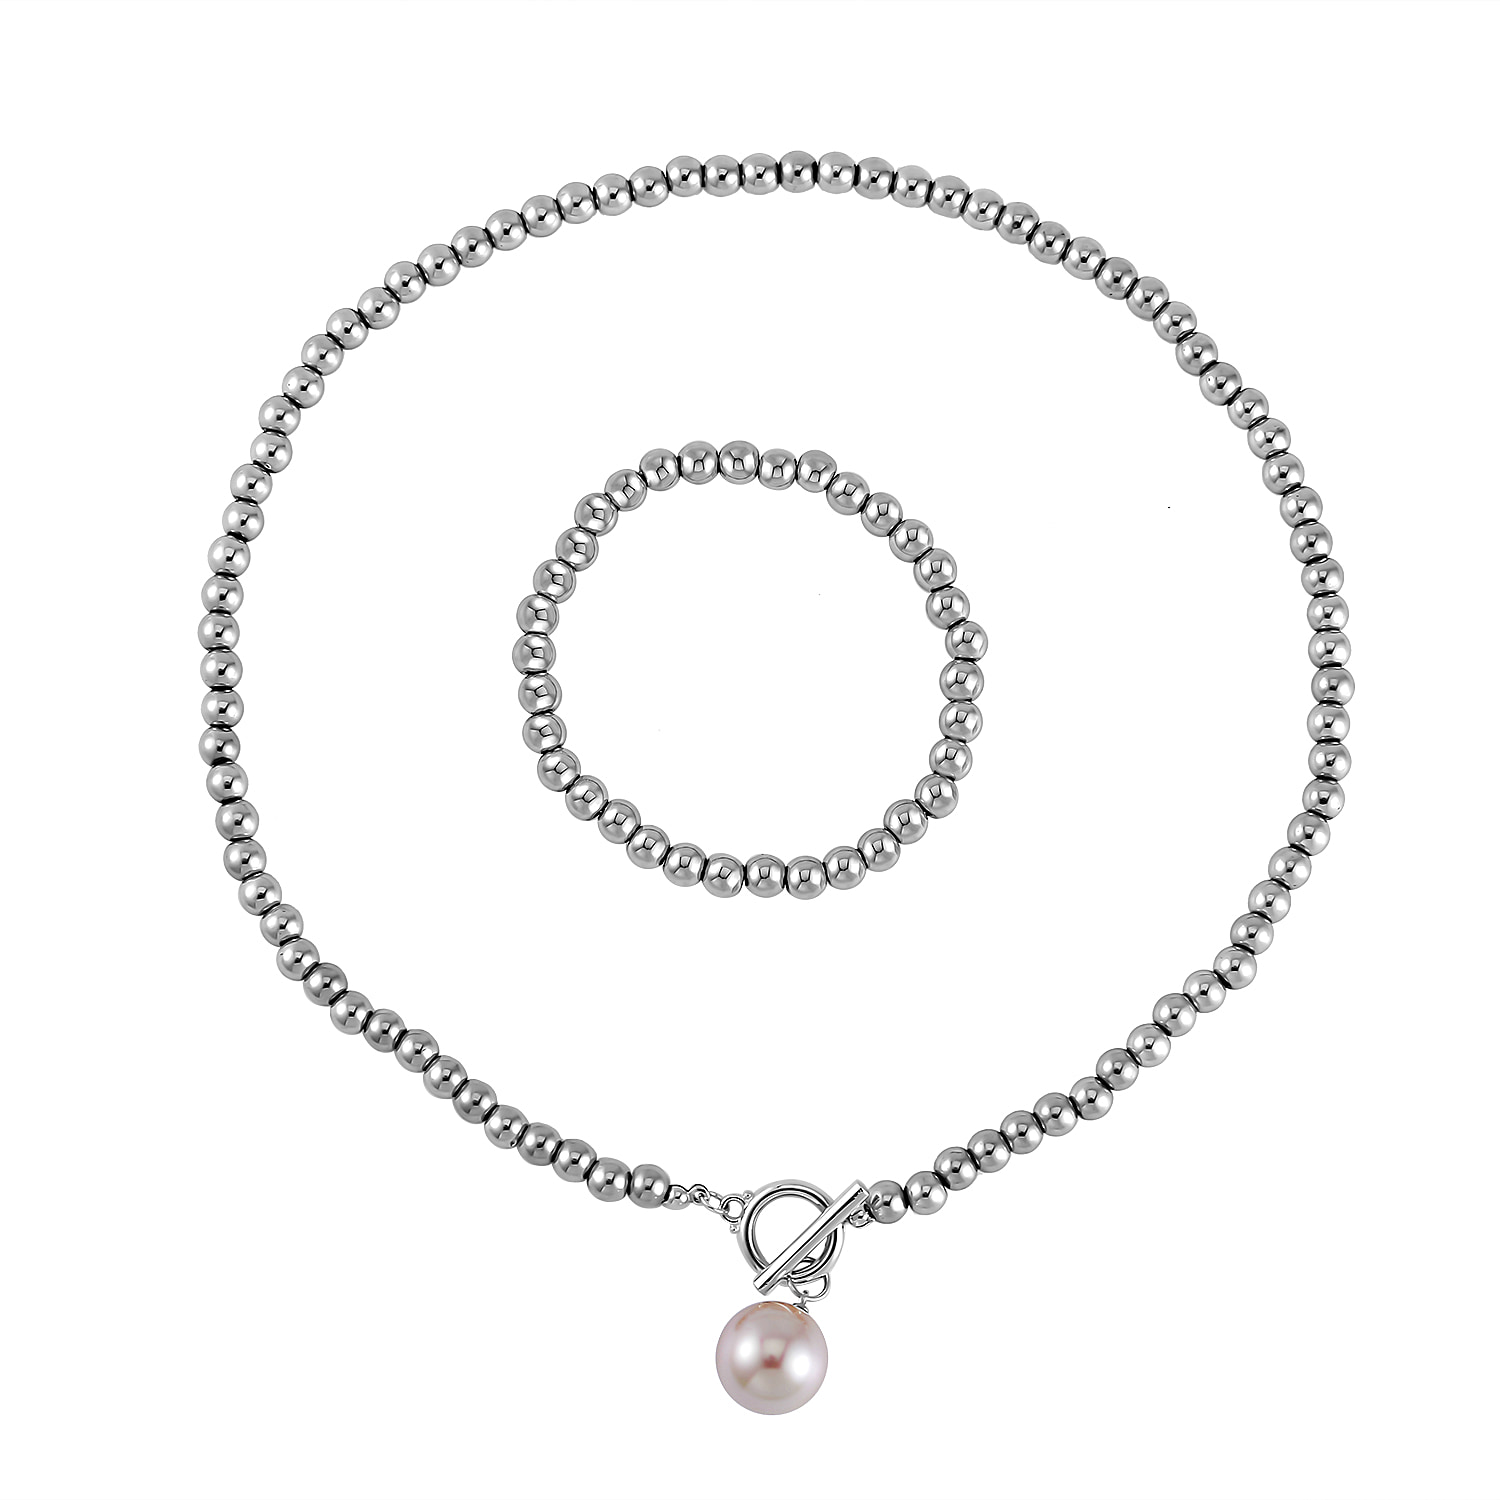 2 Piece Set - Hematite & White Shell Pearl Necklace (Size 19.5) and Adjustable Bracelet (Size 7.25)